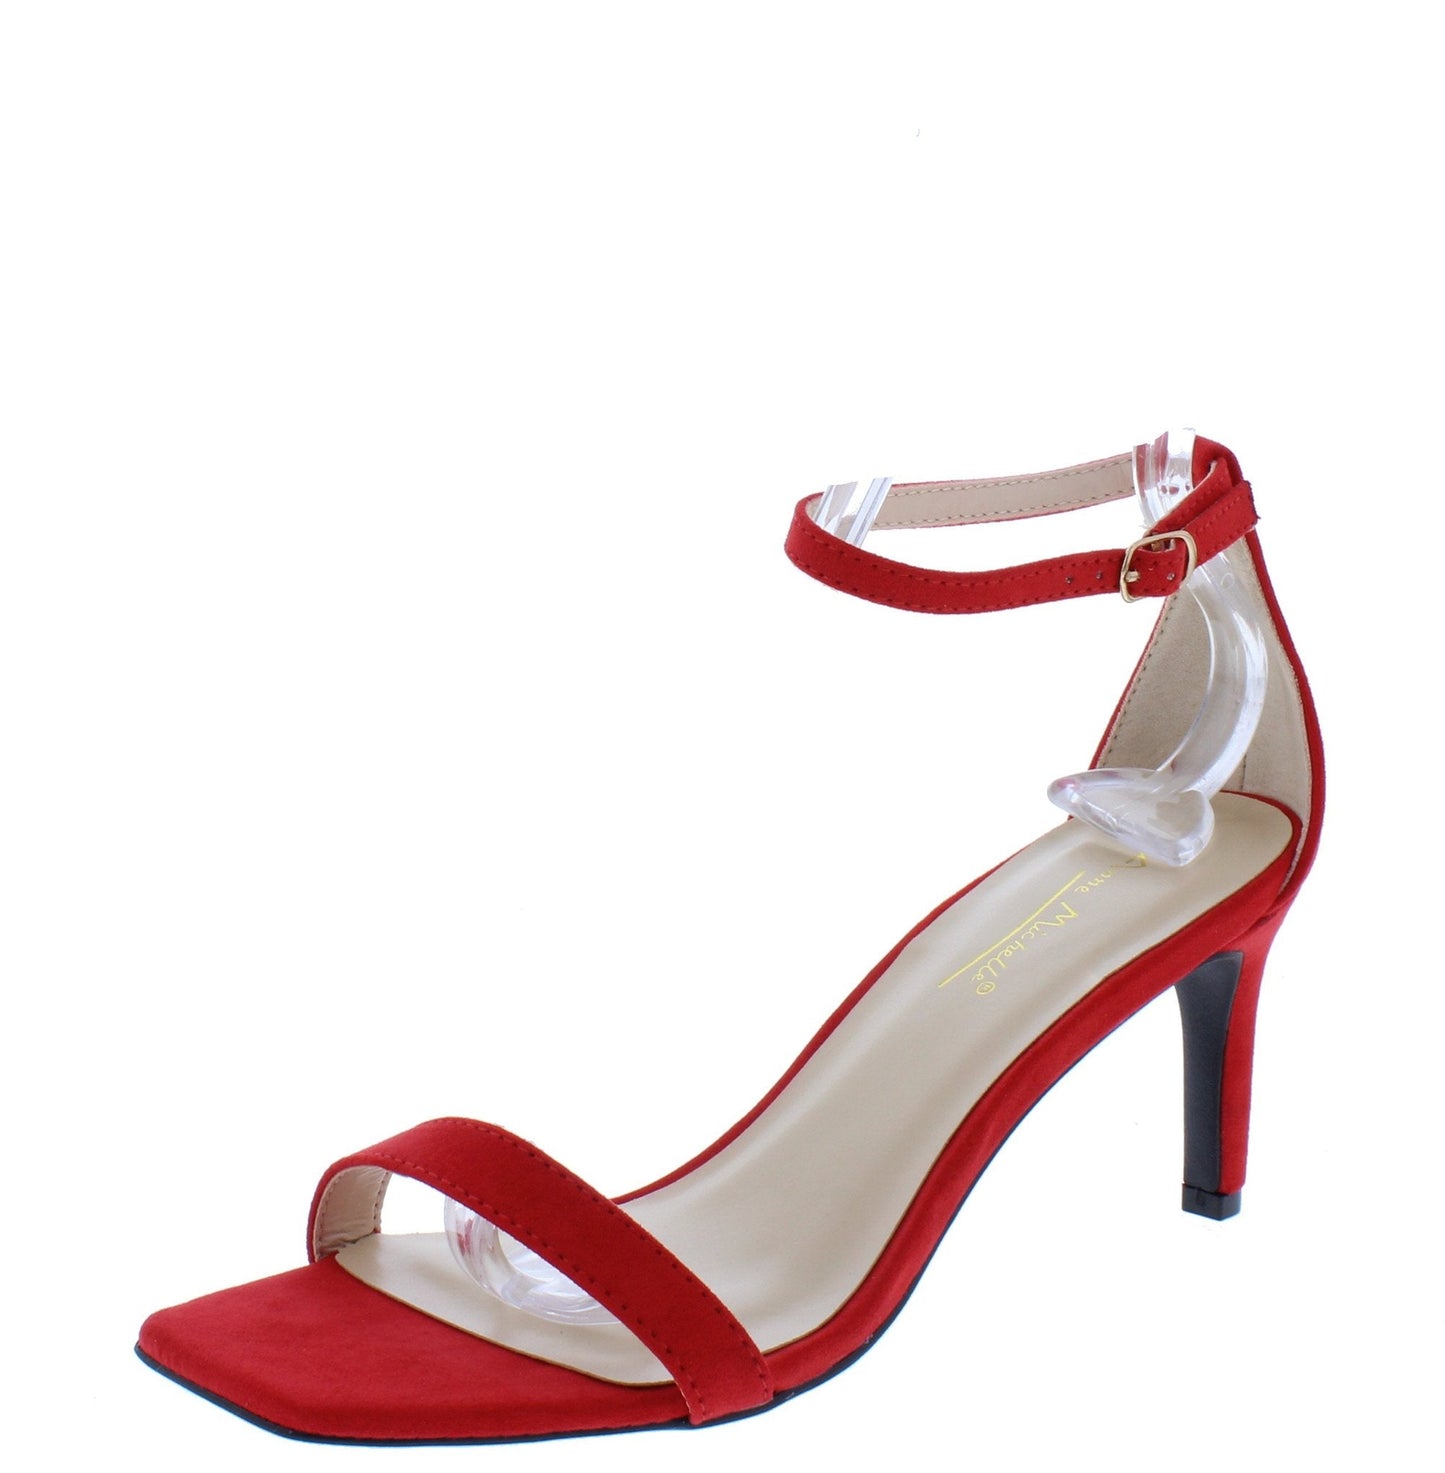 "Tiara" Red Low Heels